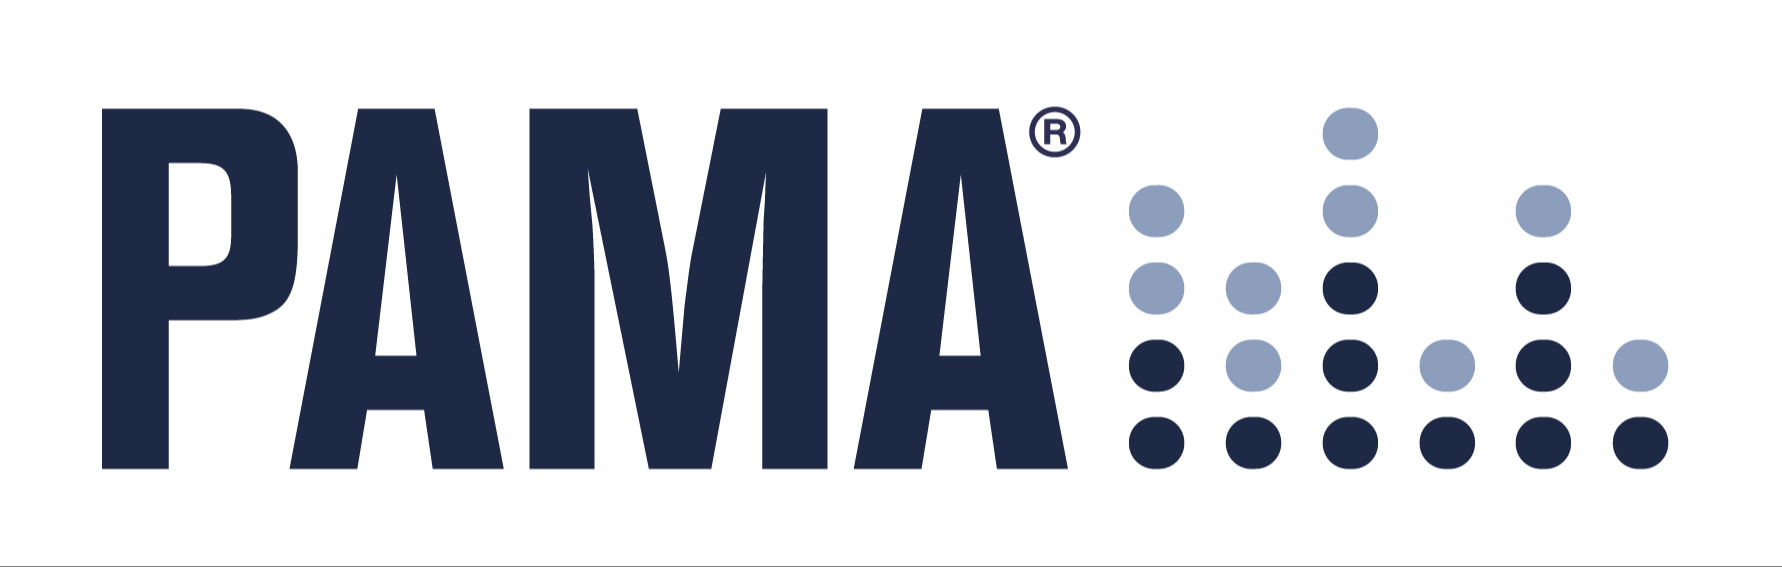 Professional Audio Manufacturers Alliance logo